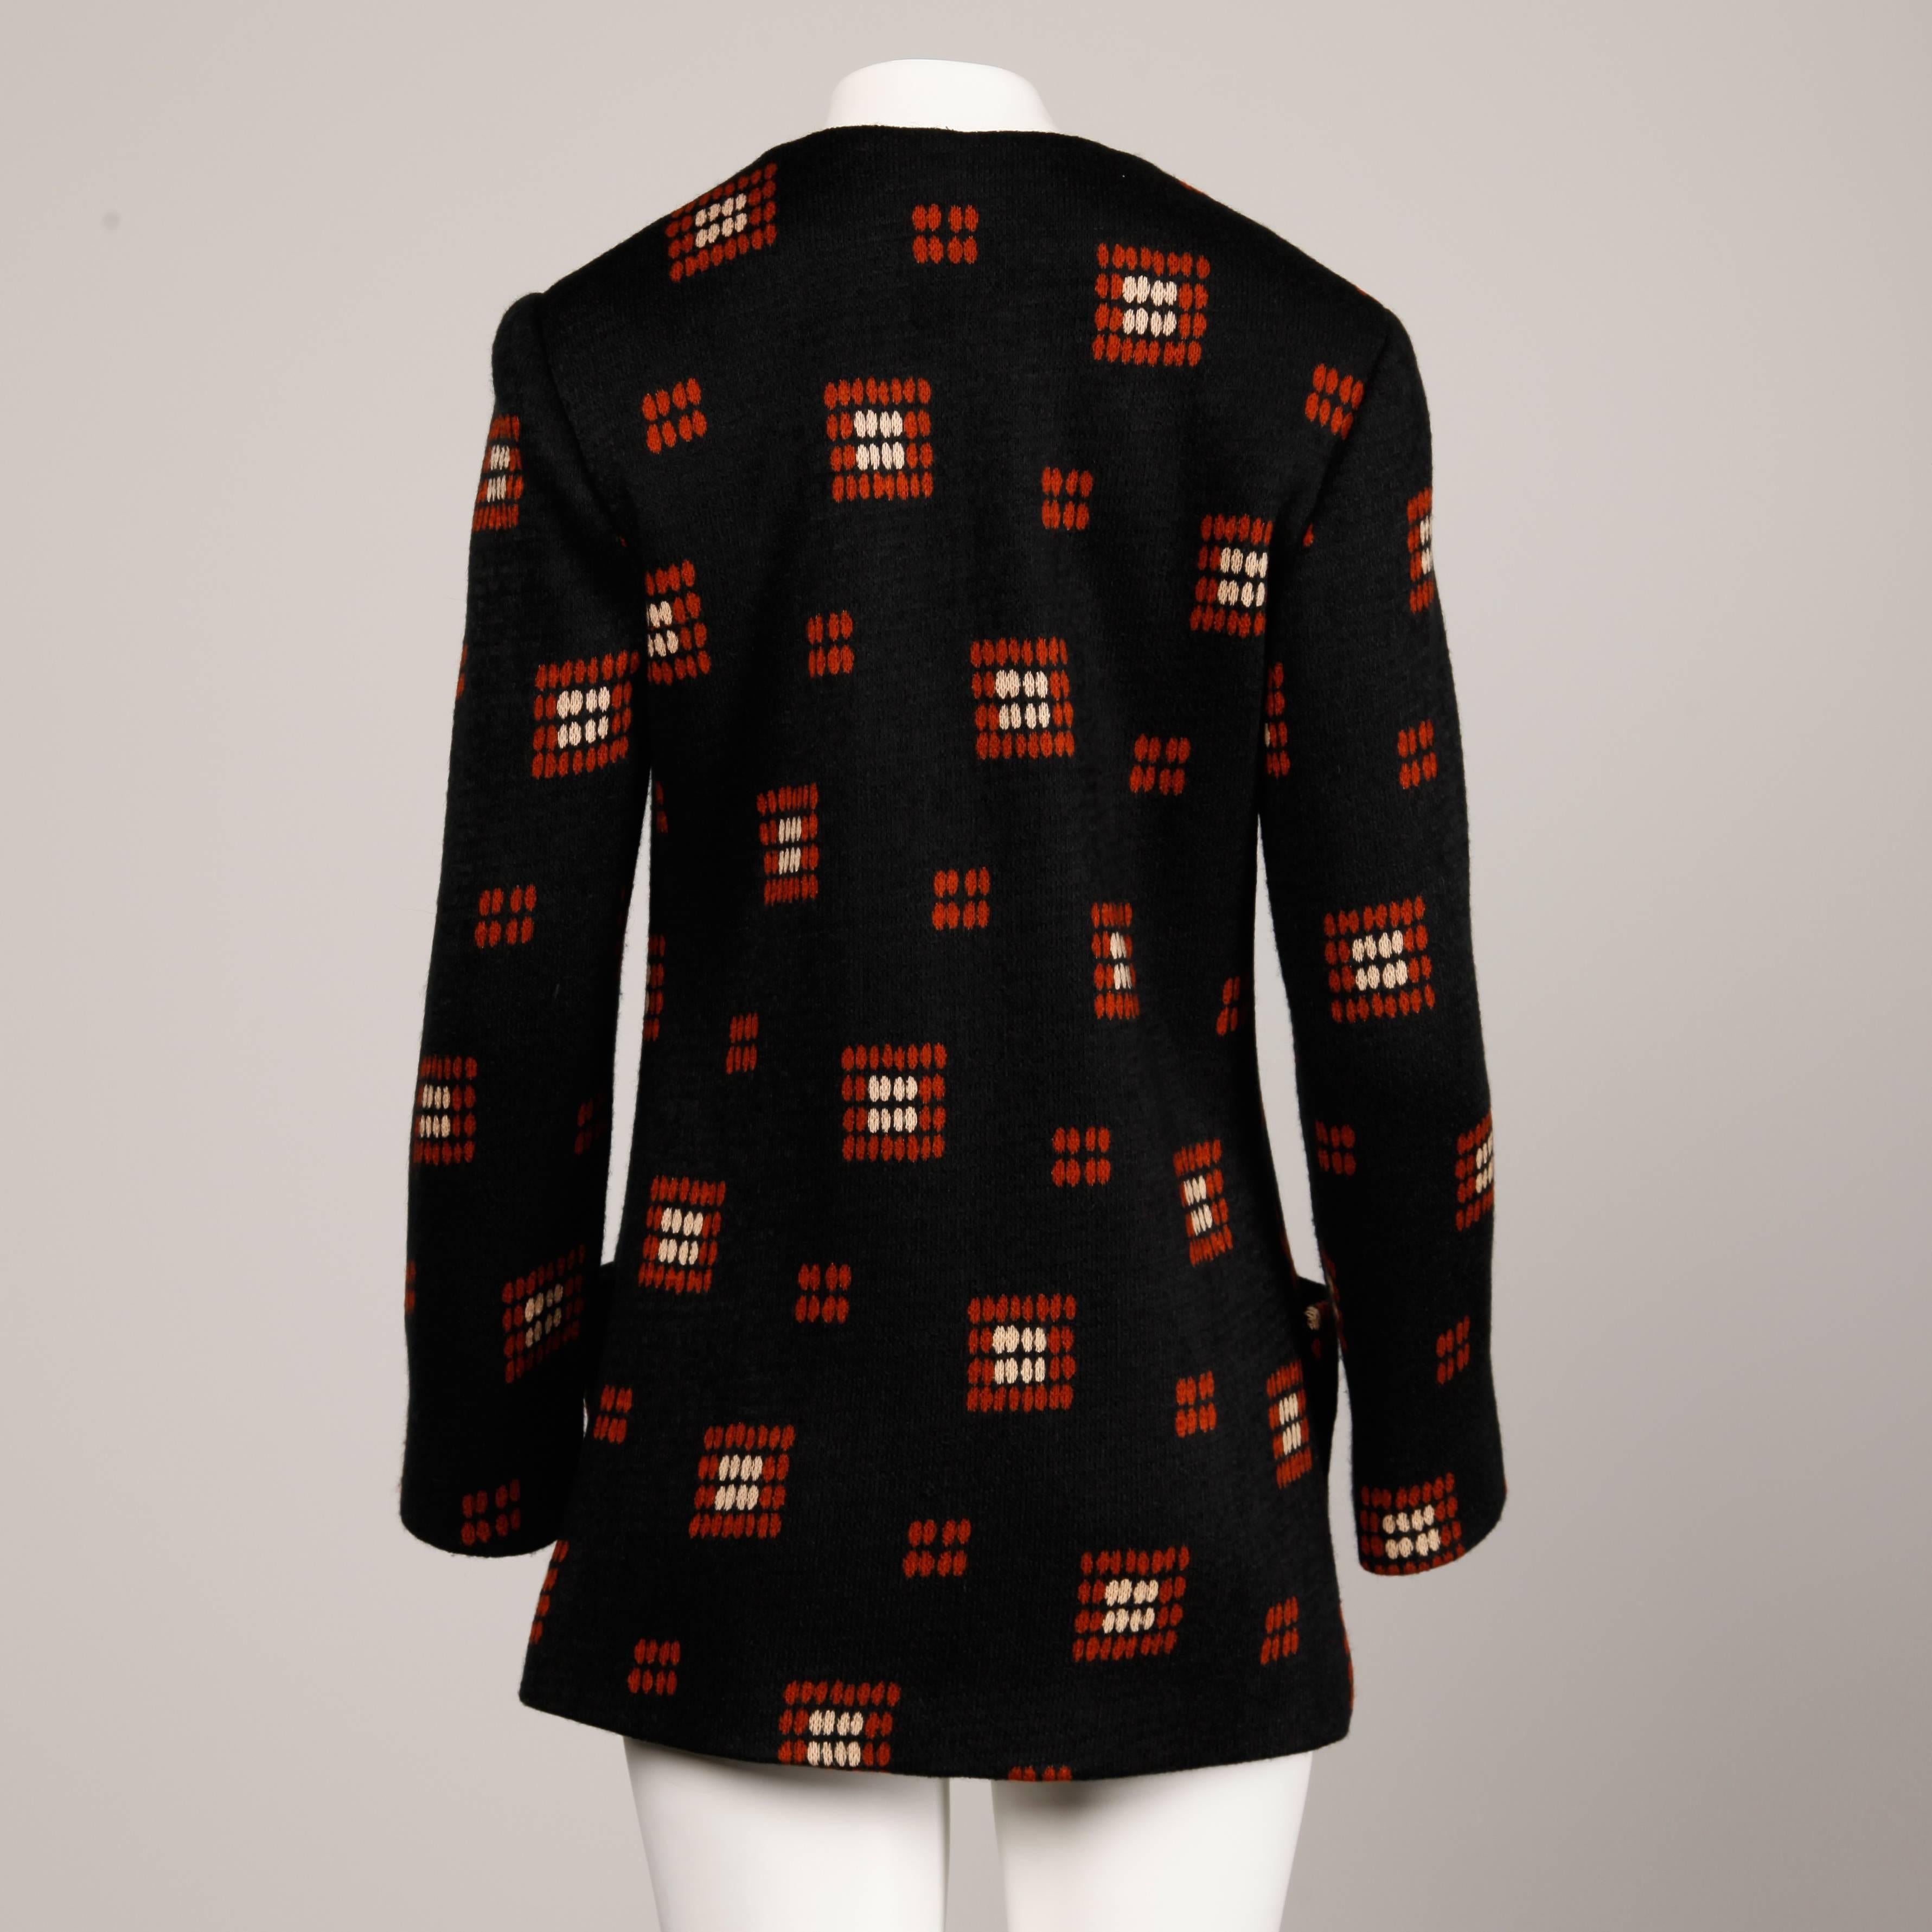 Women's 1970s Teal Traina Vintage Wool Knit Cardigan Sweater Blazer Jacket